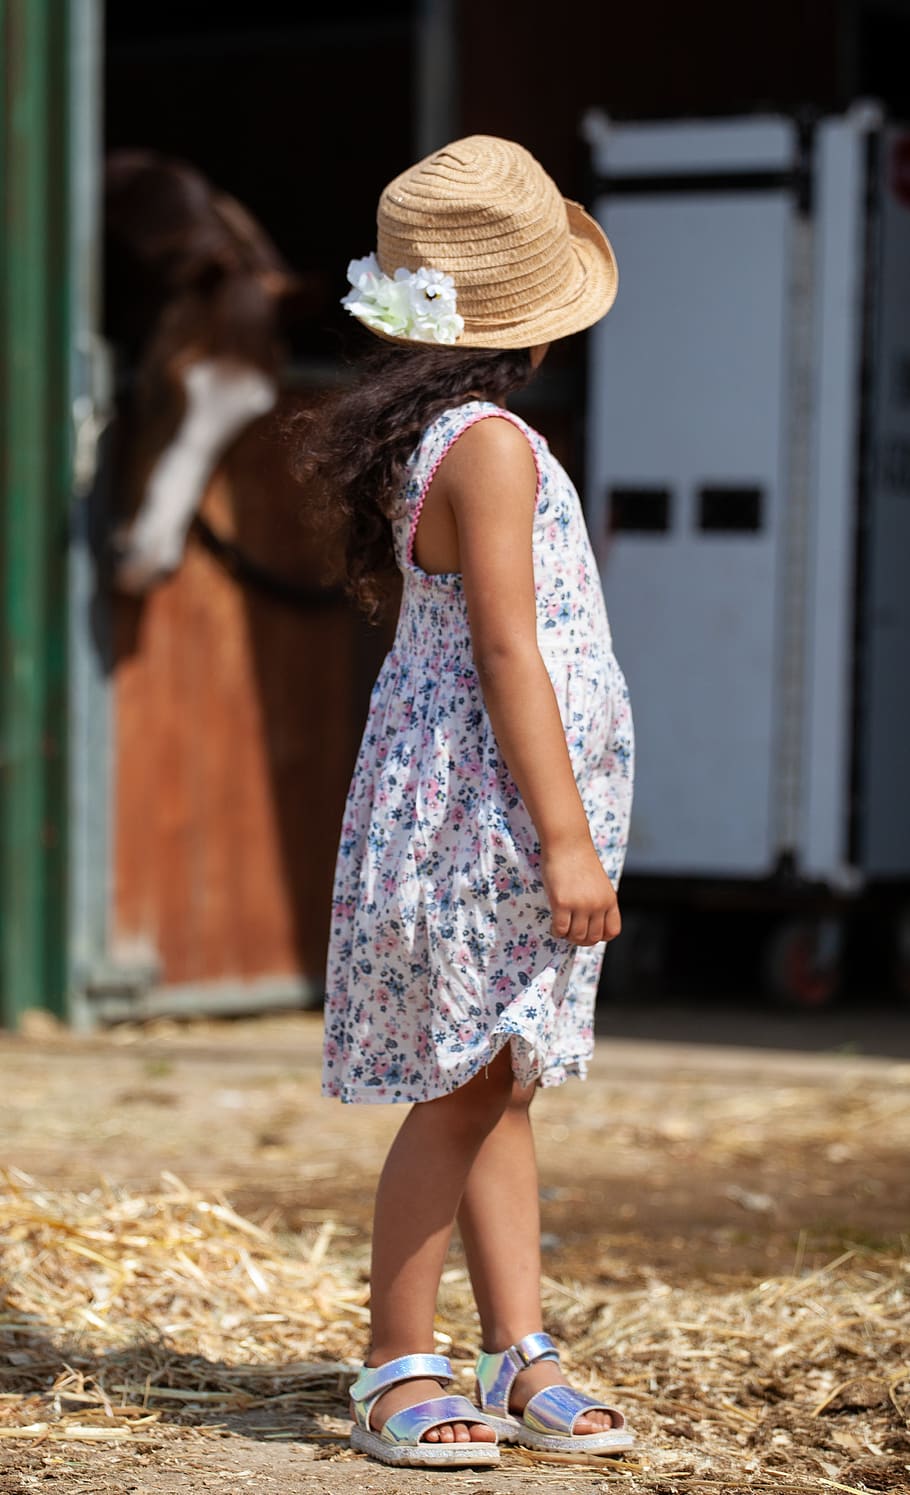 niño en establo, caballo, niño con sombrero, niño, sombrero, retrato, niña, infancia, persona, verano